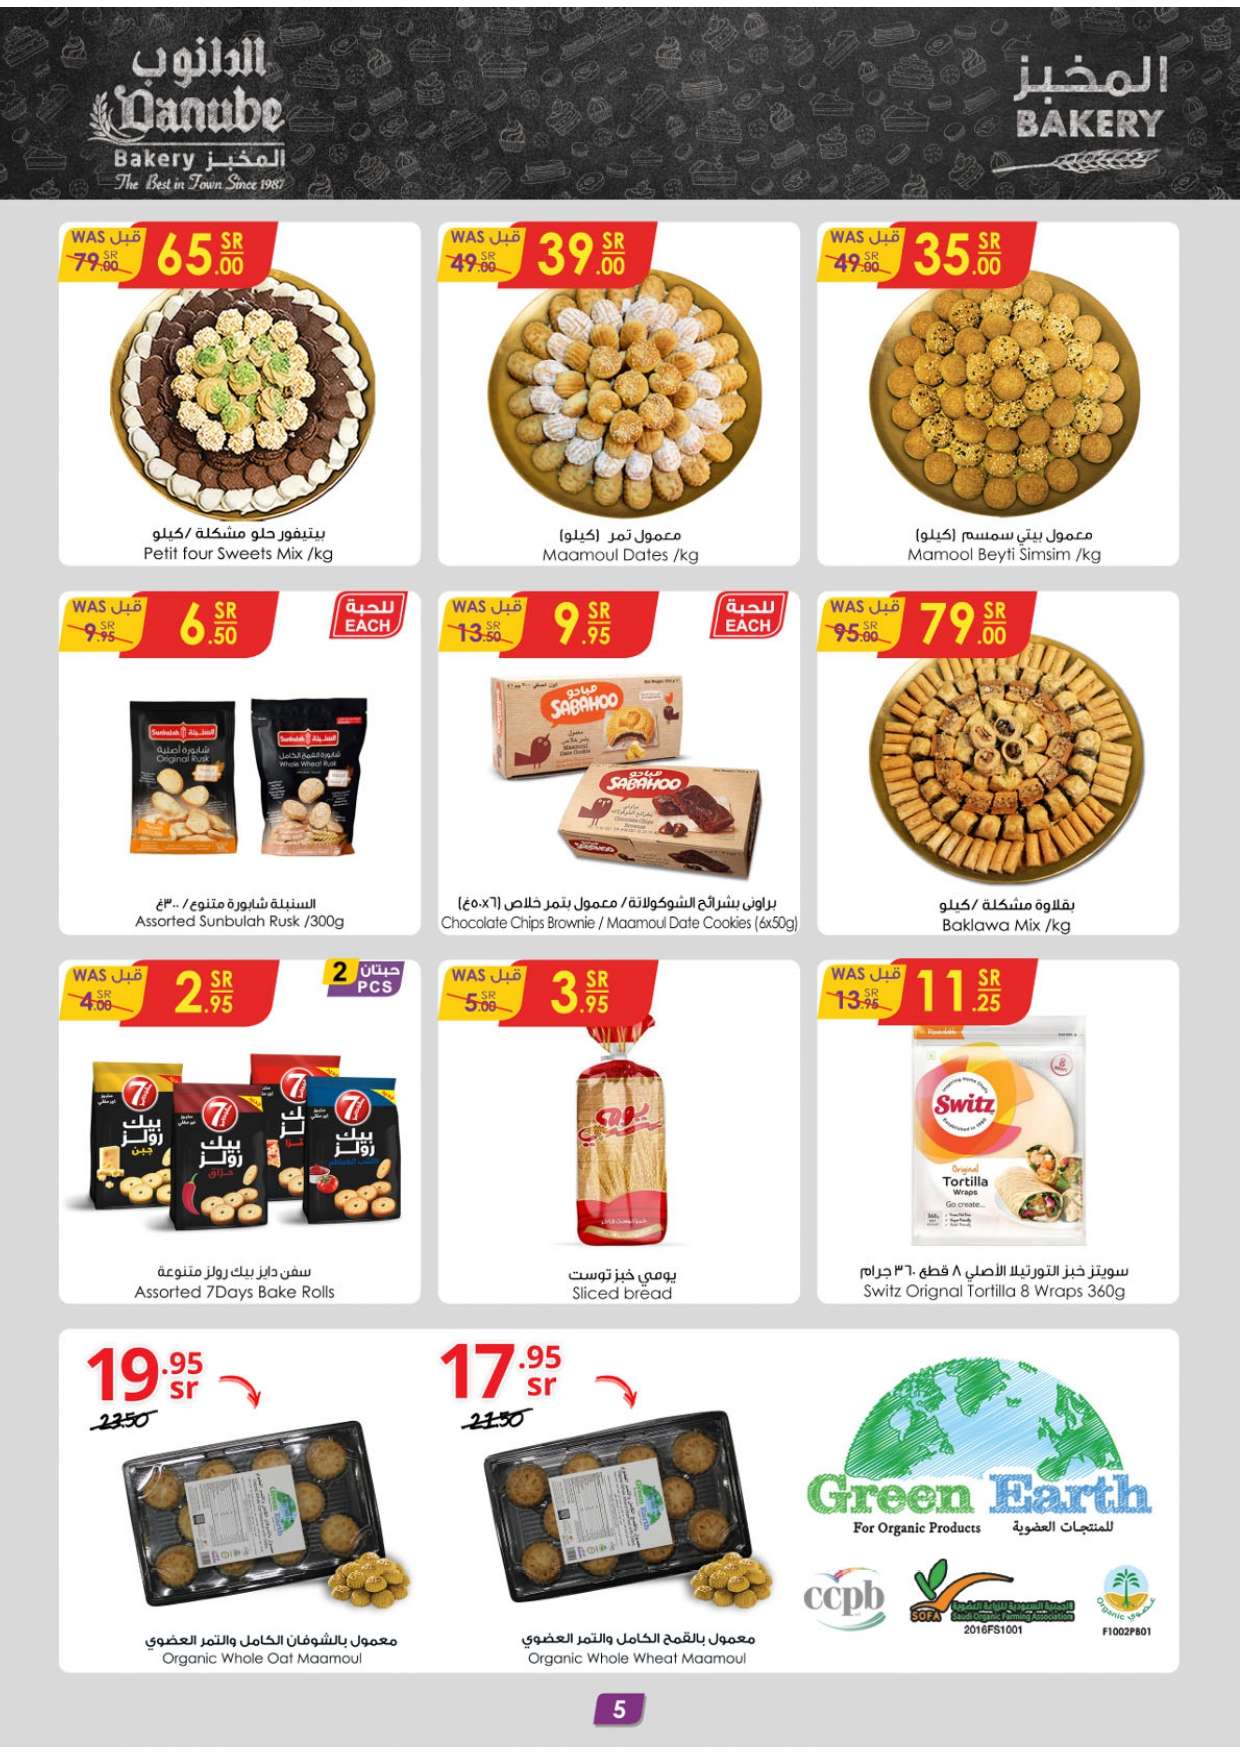 fmKyKM - تسوق أسبوع المأكولات العالمية في عروض الدانوب الرياض الاربعاء 1-5-1445 هـ الموافق 15 نوفمبر 2023